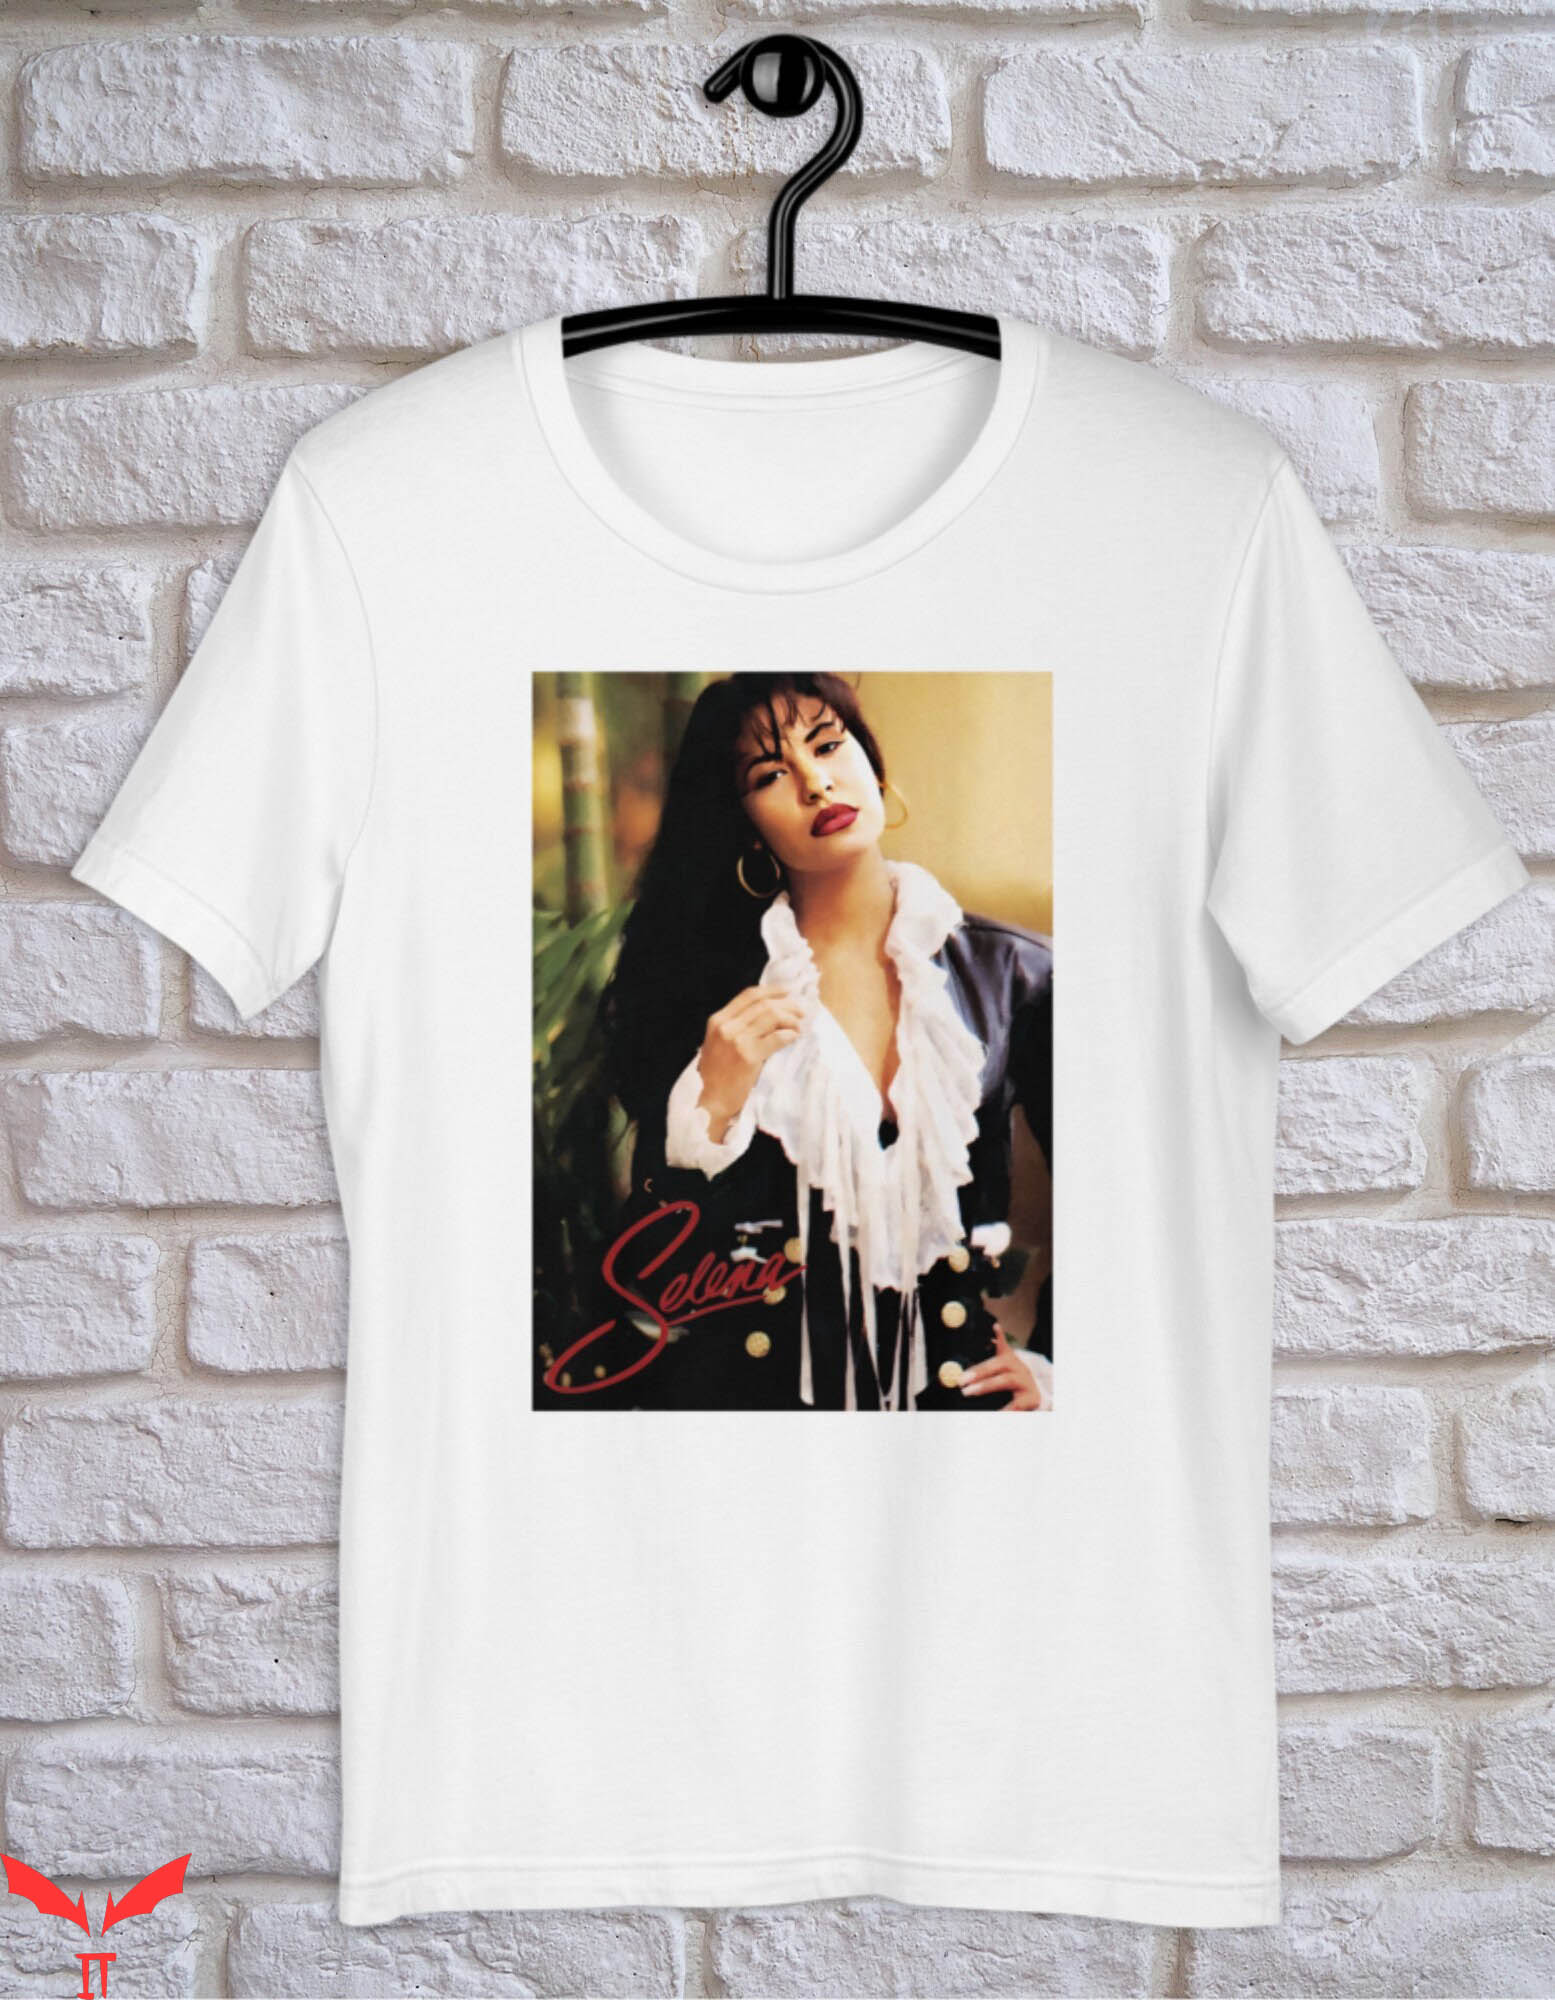 Selena Vintage T-Shirt Selena Quintanilla Vintage Inspired